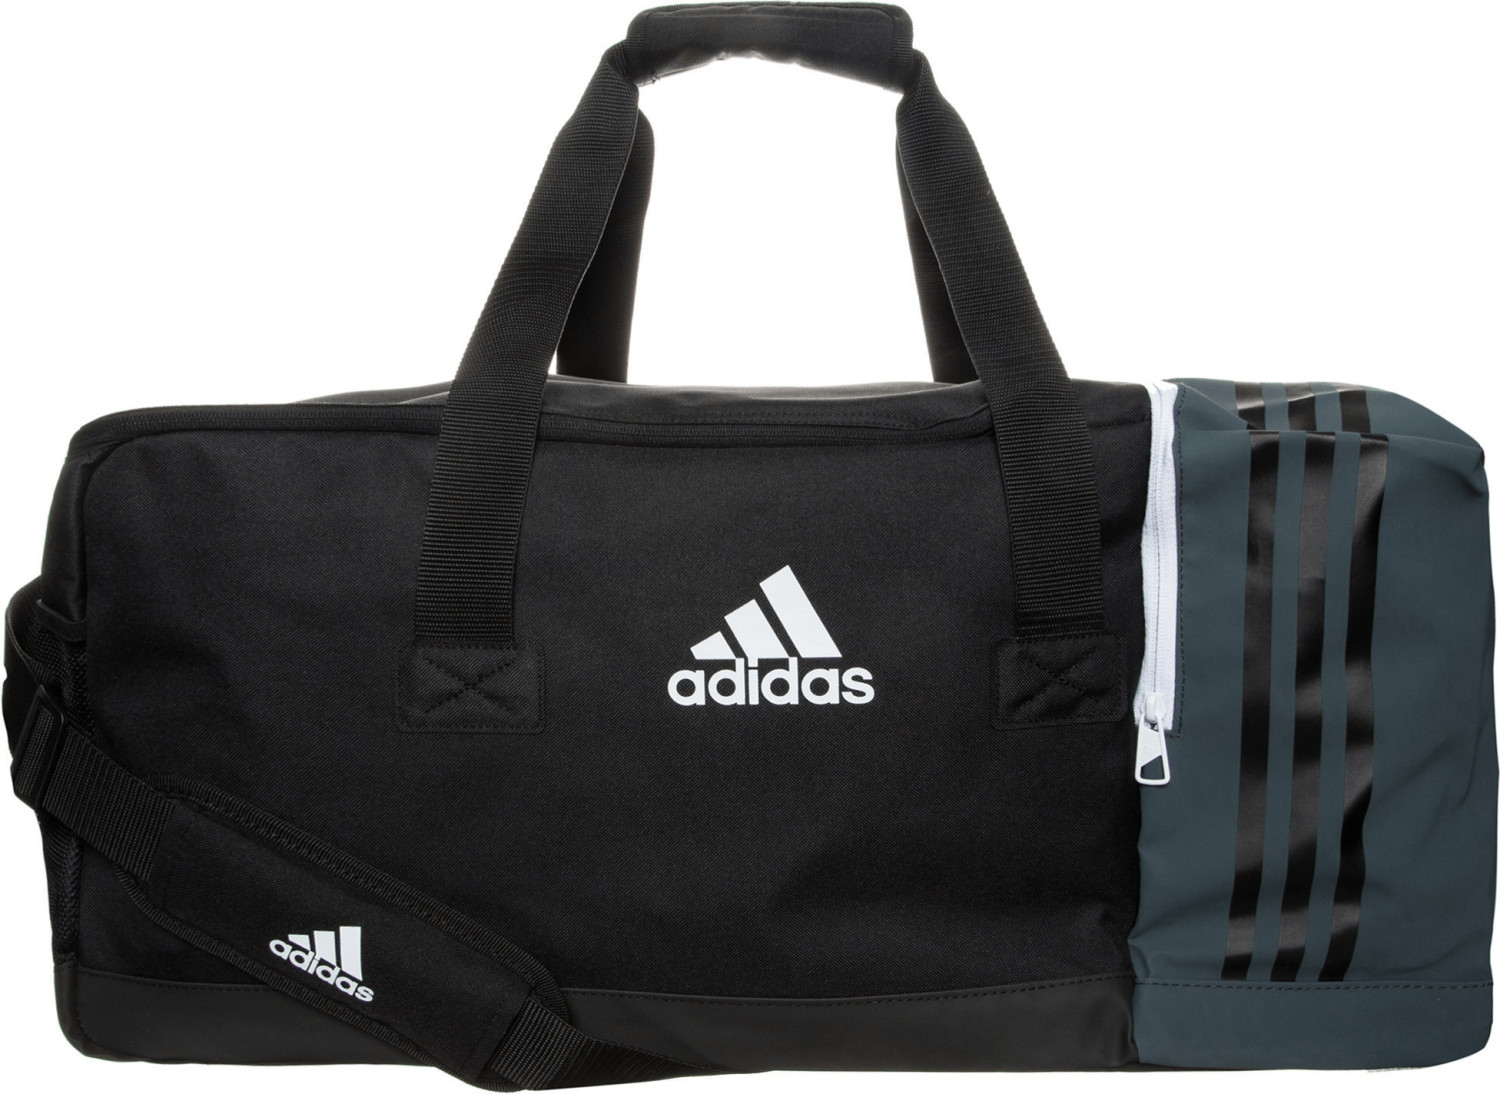 Adidas Tiro Teambag L black/dark grey/white (B46126)